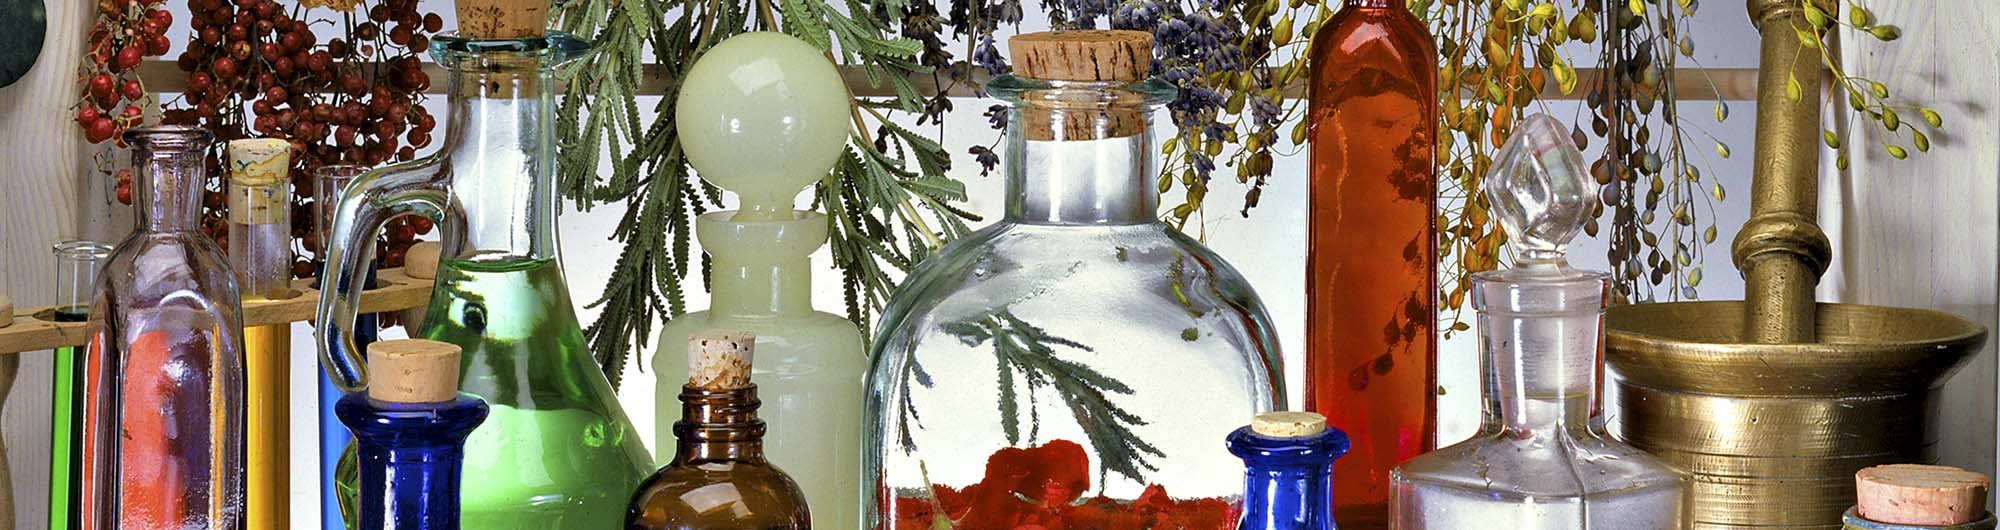 Display of Fragrance Oils